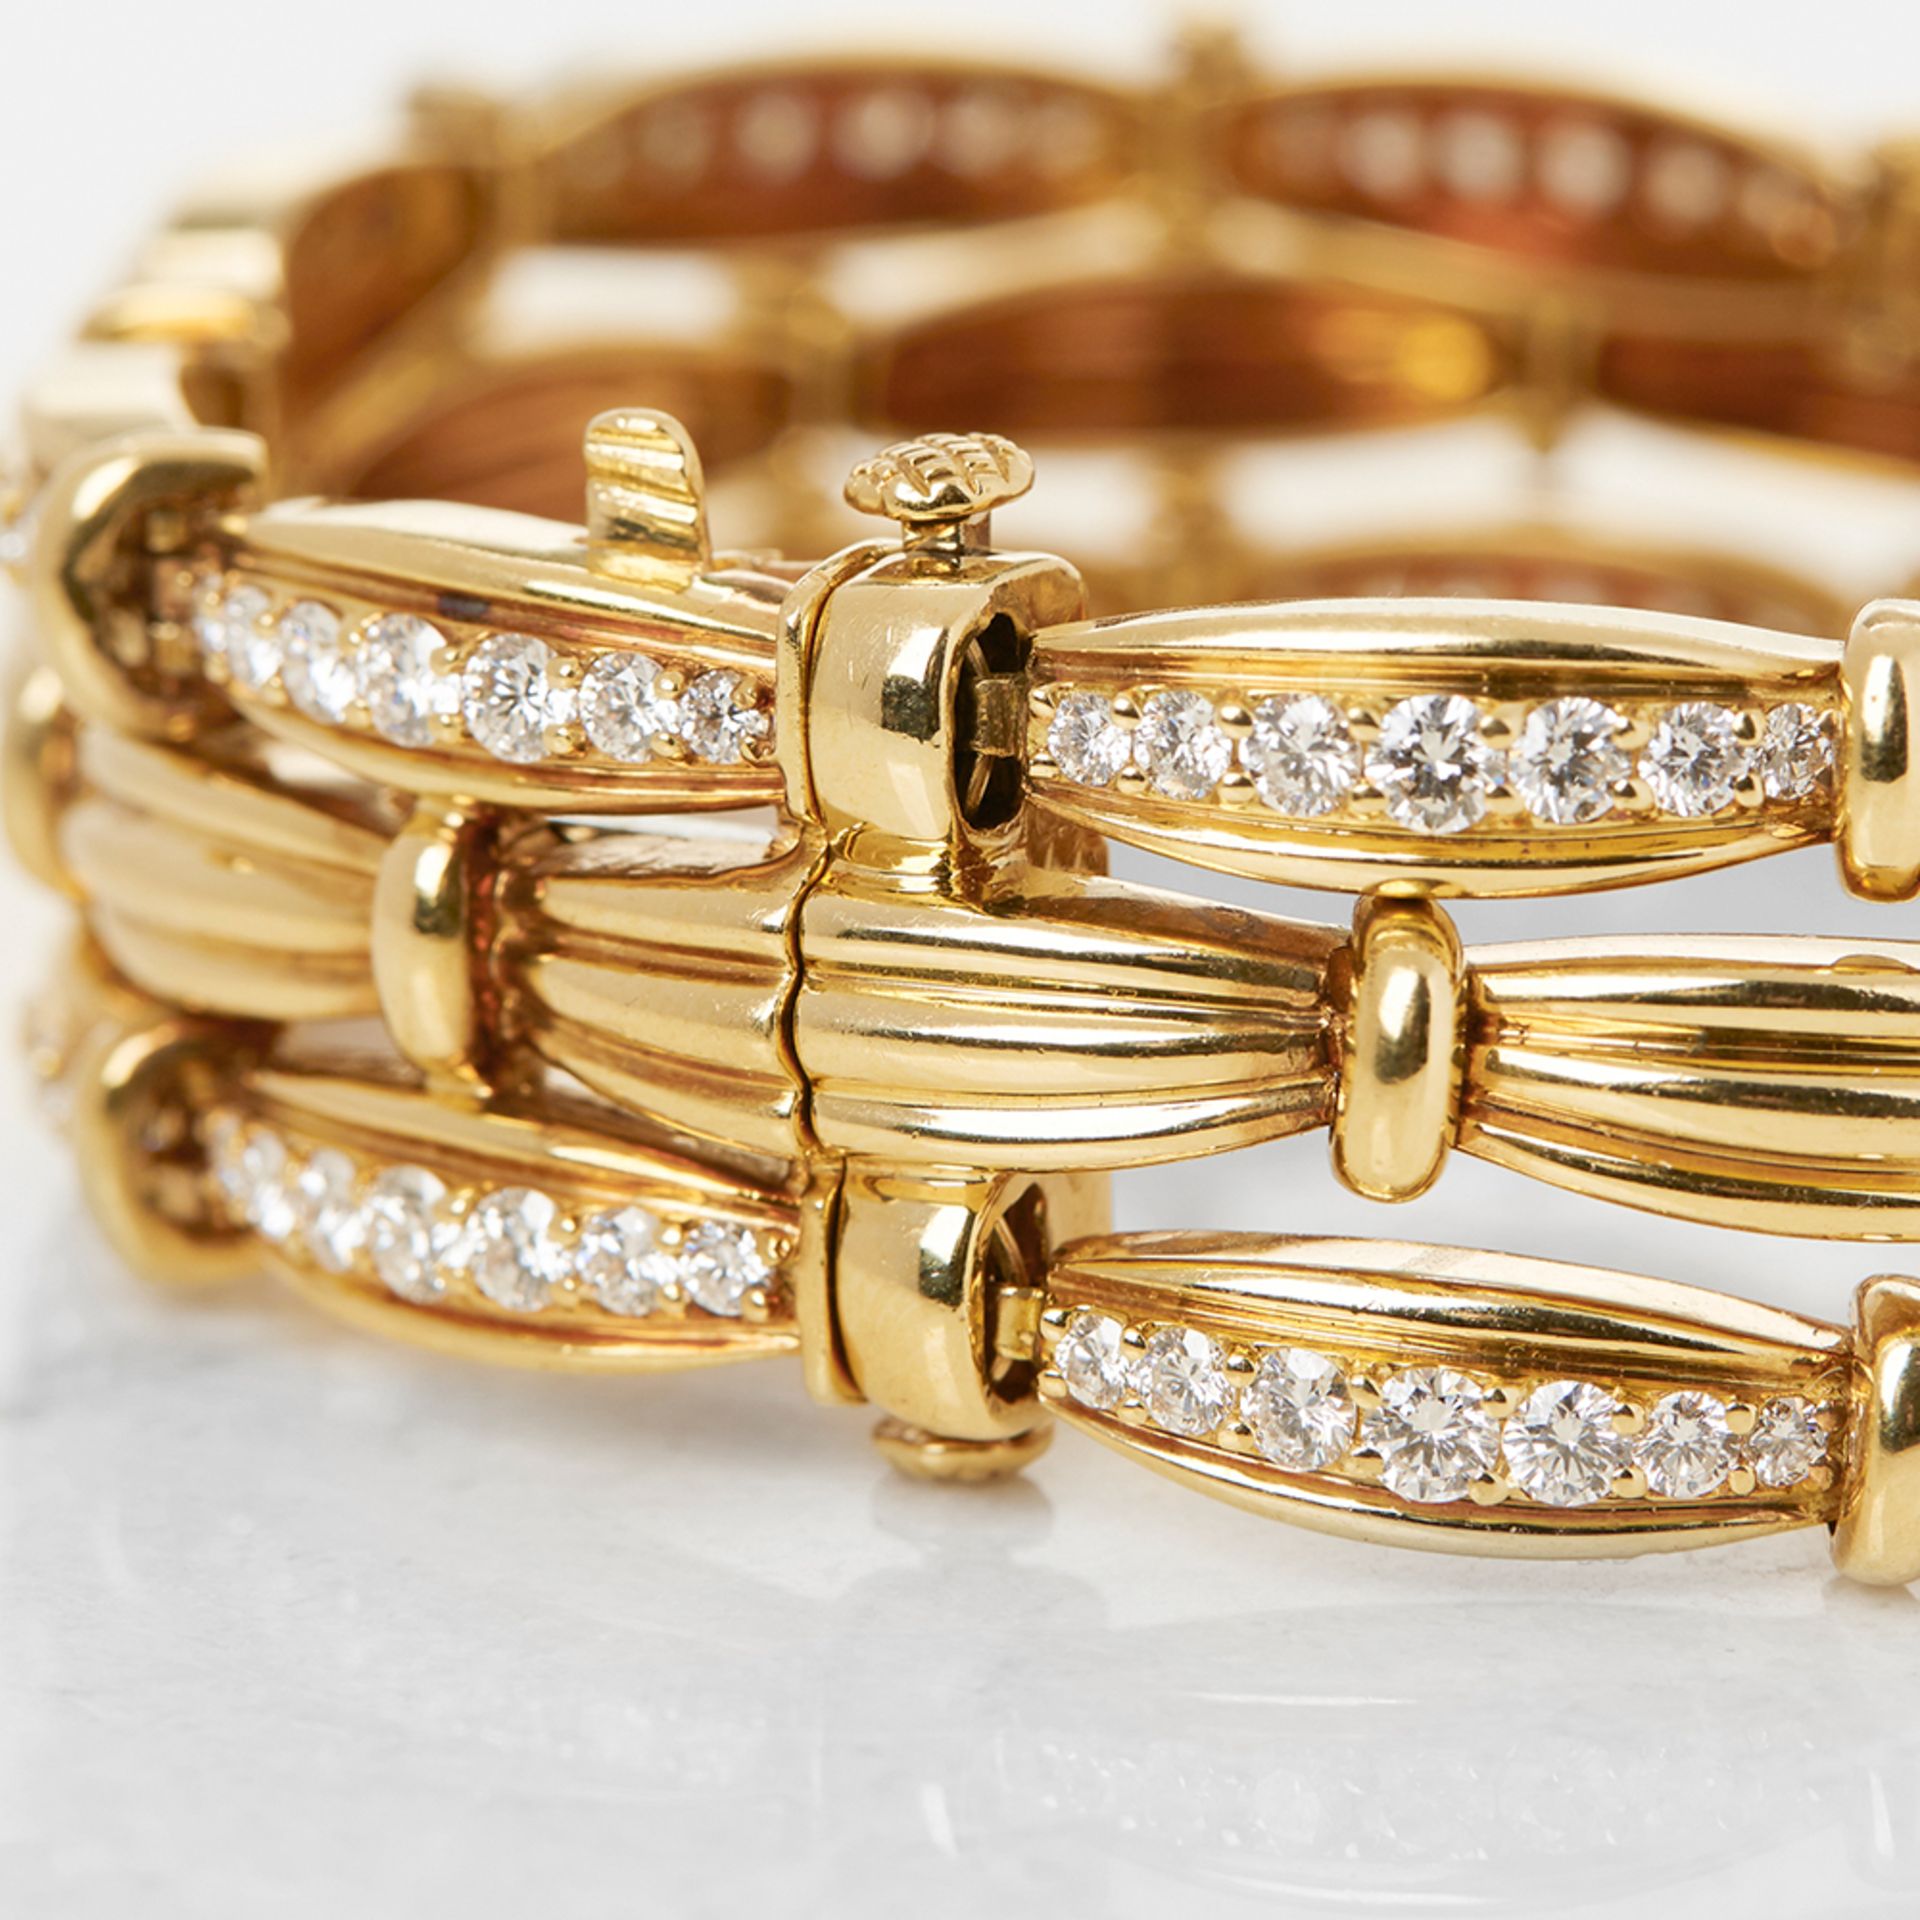 Tiffany & Co. 18k Yellow Gold Diamond Three Strand Vintage Bracelet with Presentation Box - Image 10 of 17